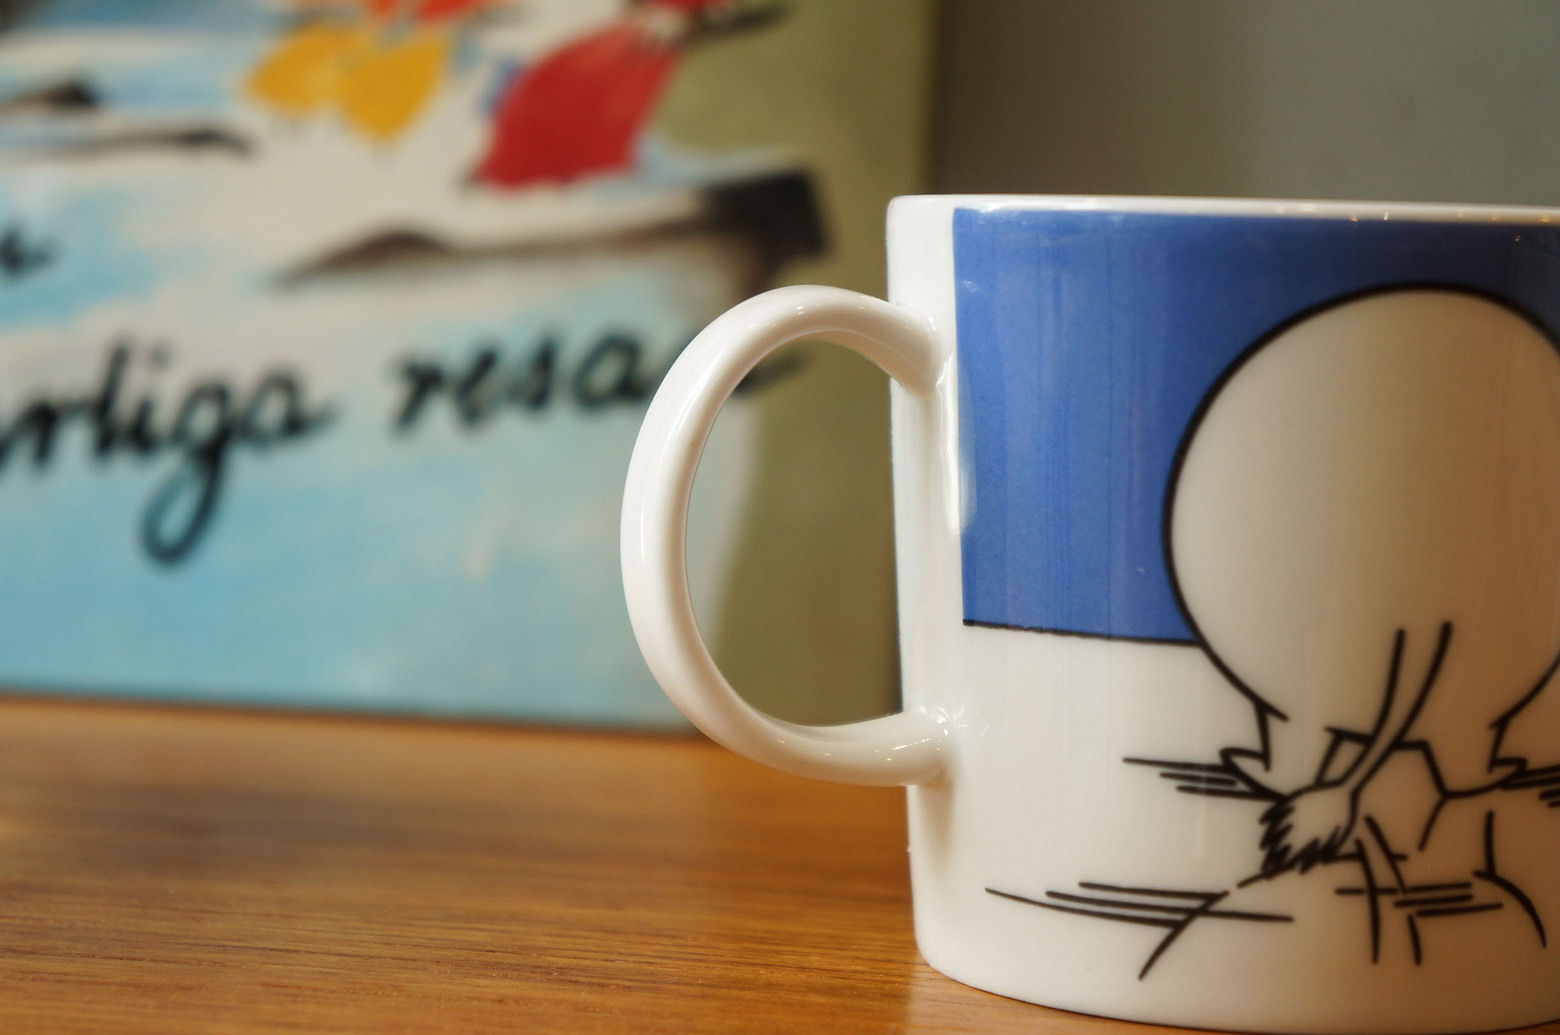 ARABIA Moomin Mug Cup Moomintroll on ice/アラビア ムーミンマグ 氷の上のムーミン 北欧食器 マグカップ フィンランド 廃盤